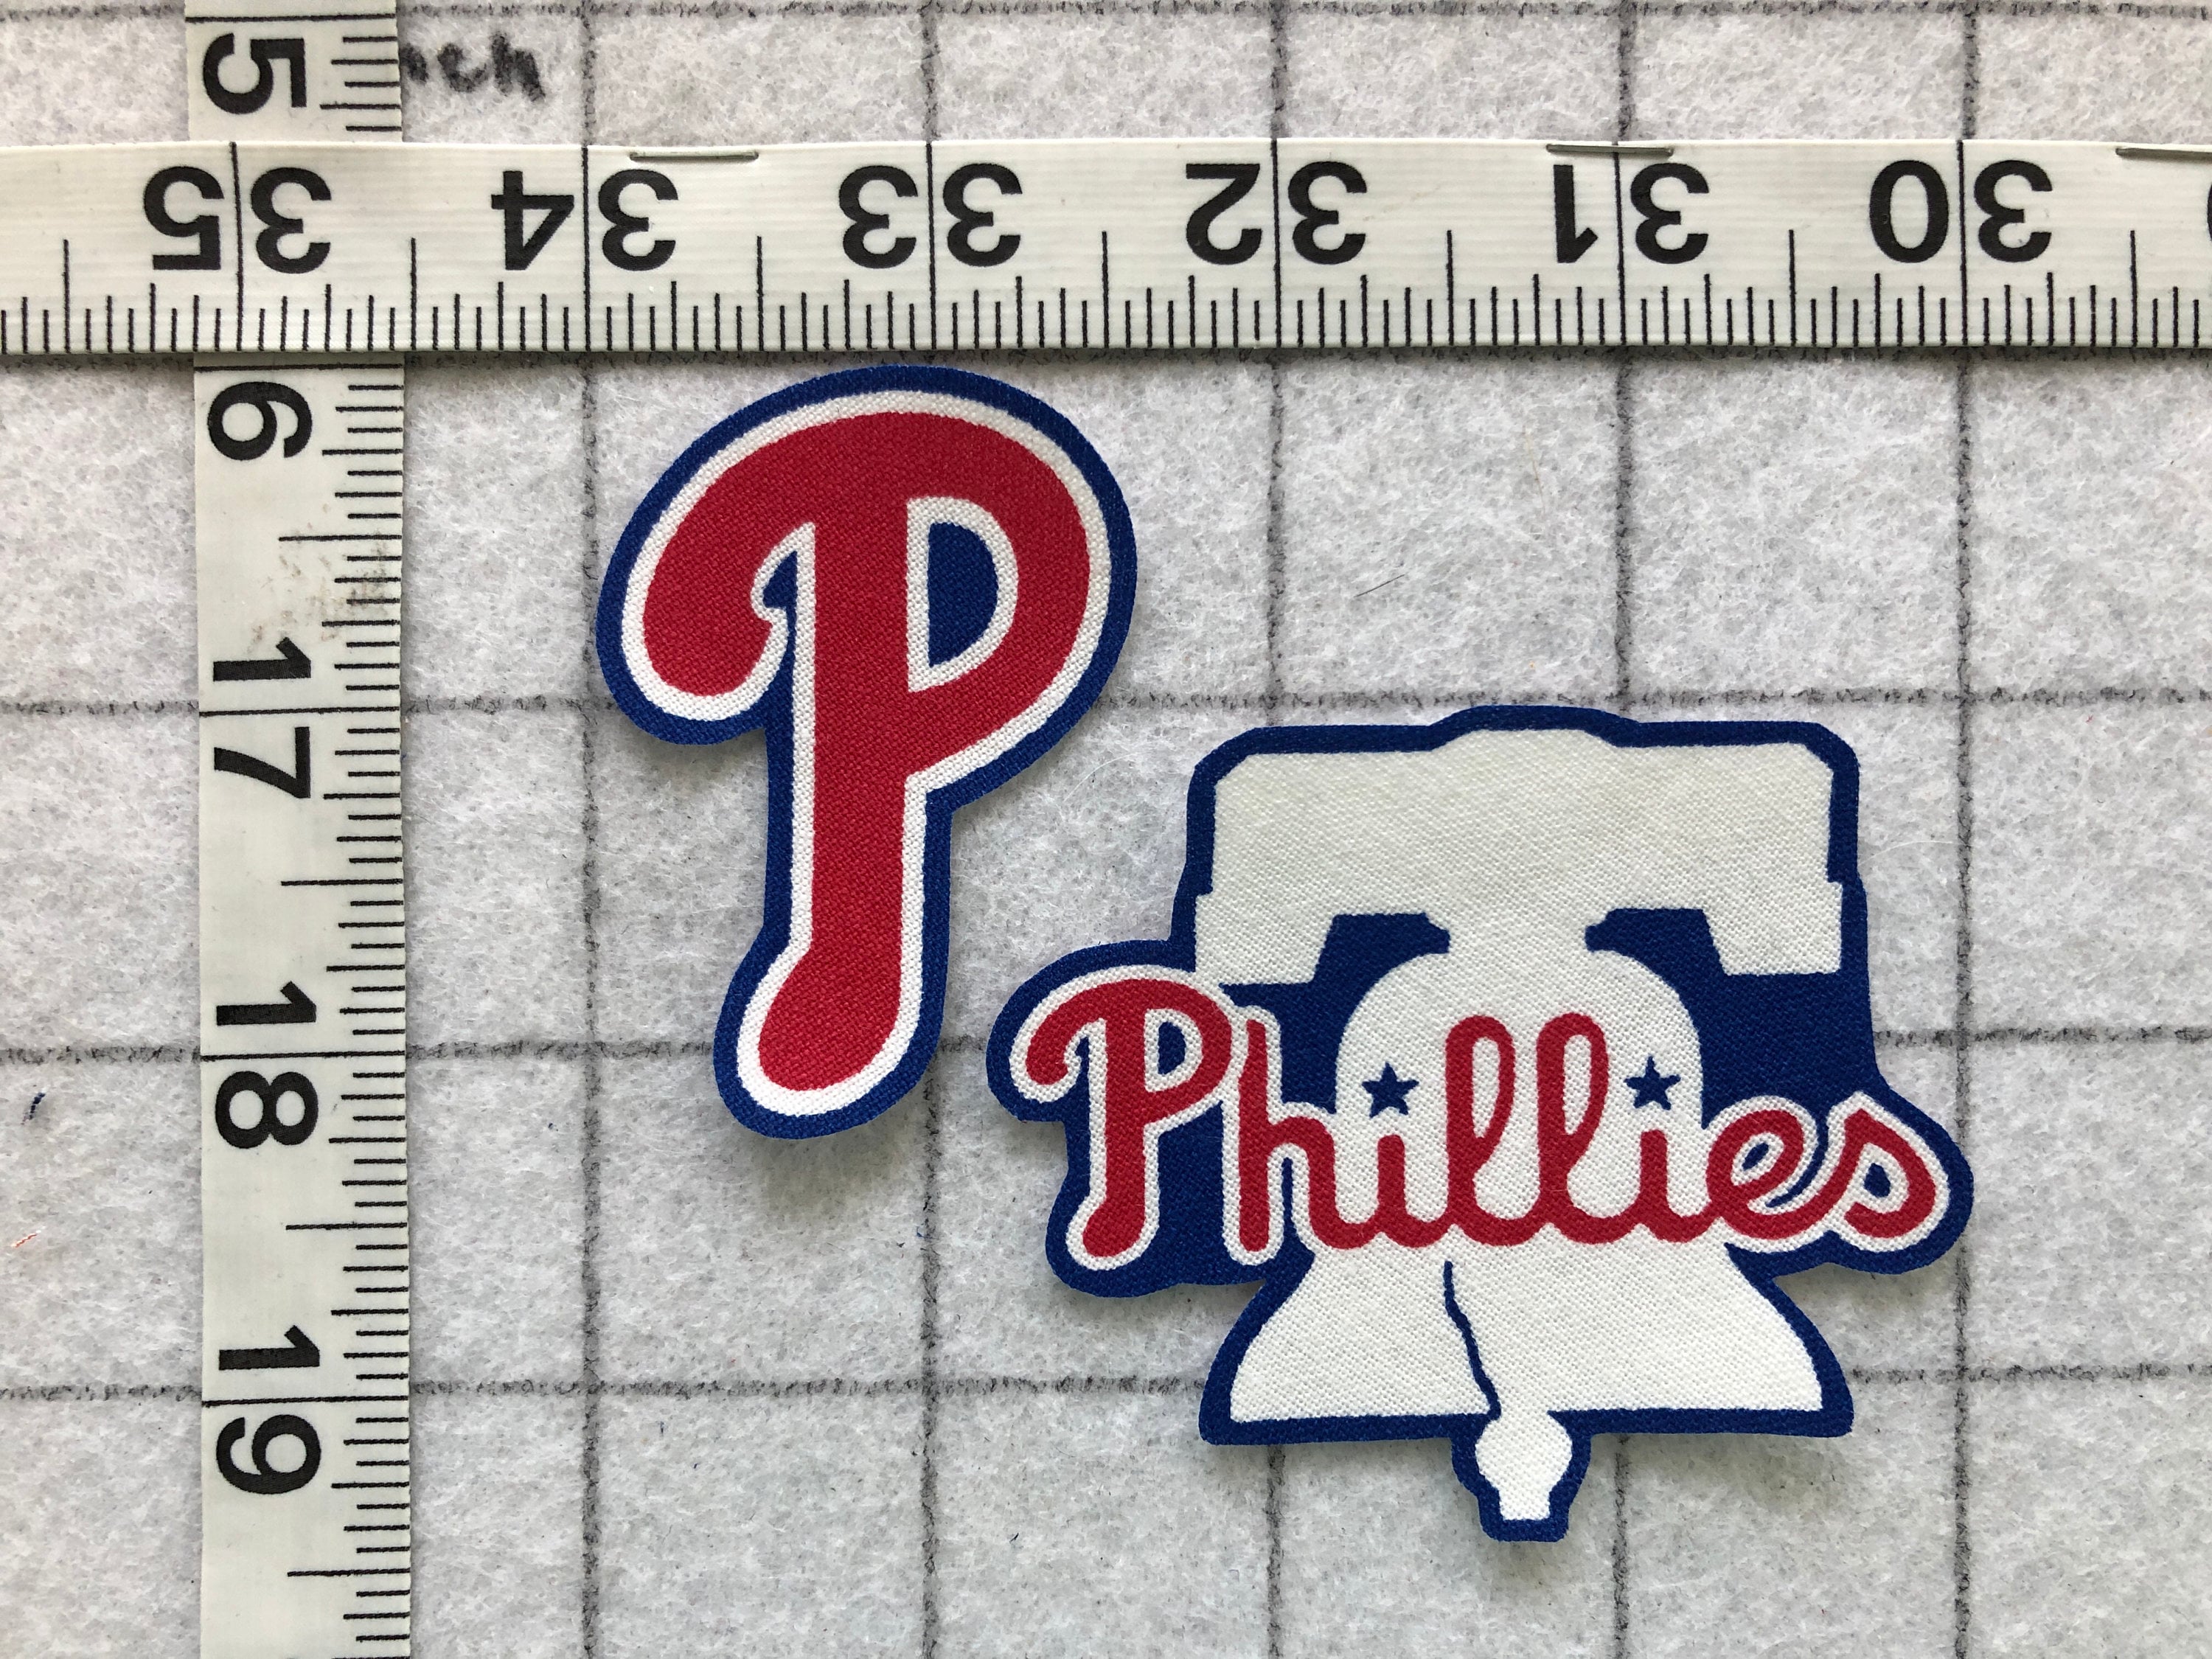 Pin on Cute Philadelphia Phillies Women's Apparel & Accessories